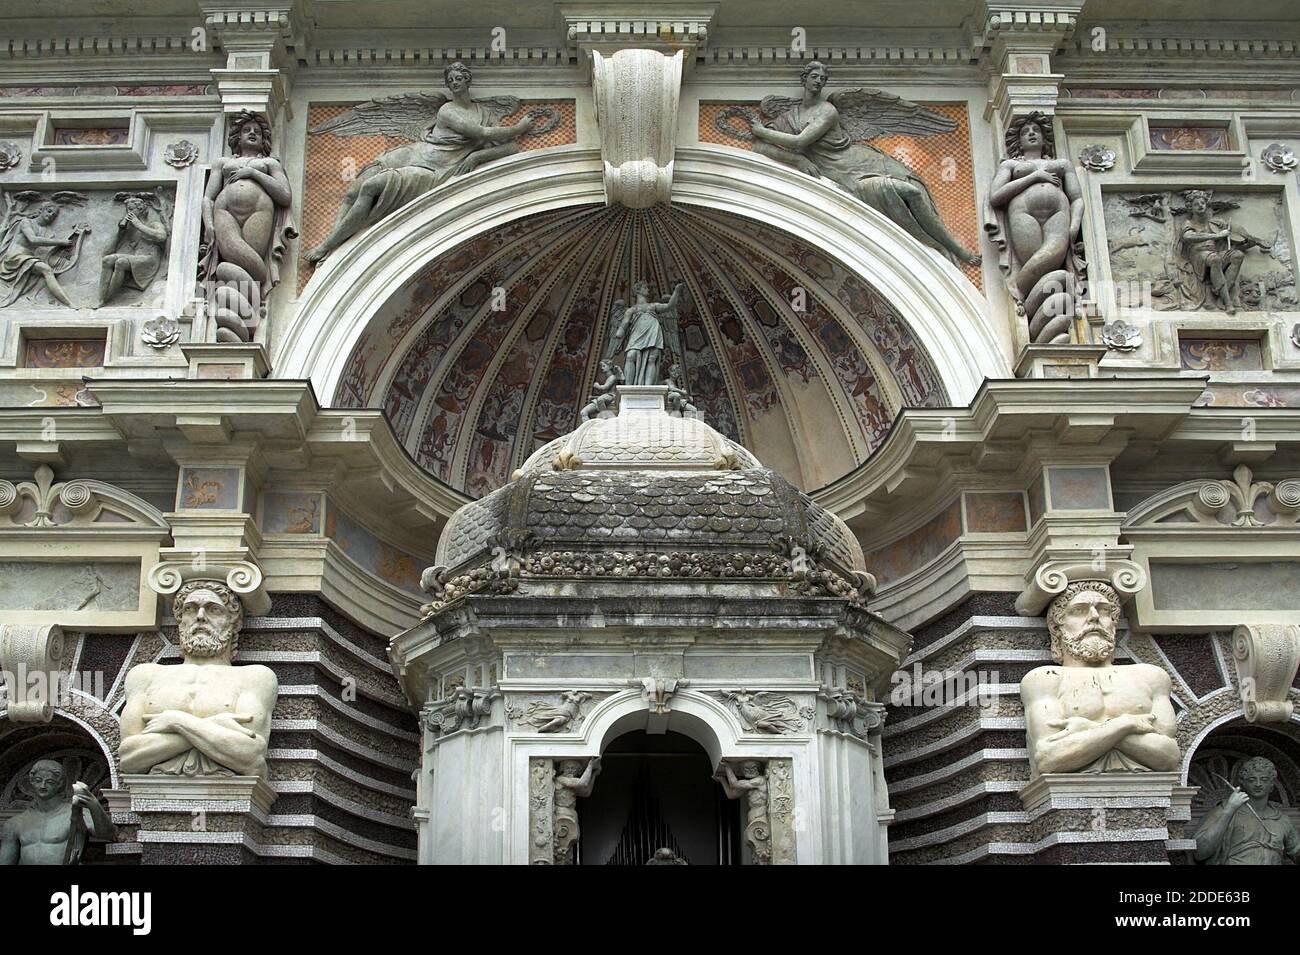 Tivoli, Italia, Italien; Villa d’Este; Fontana dell’organo; Wasserorgel Foto Stock